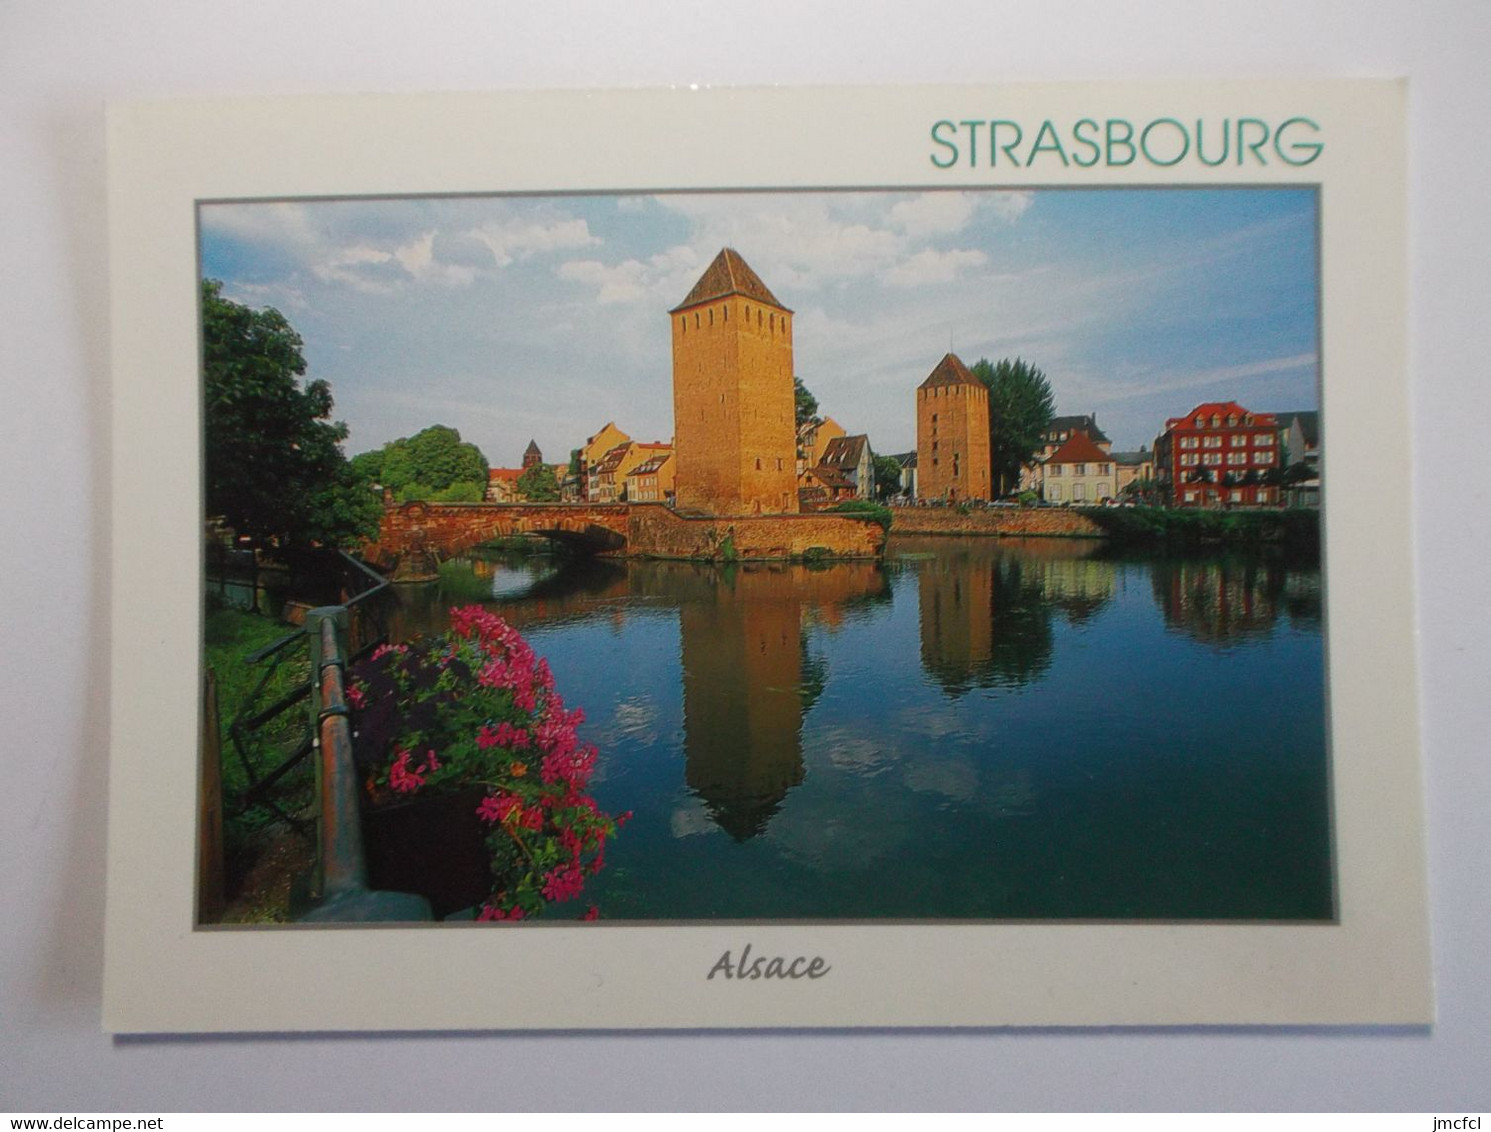 493 Cartes  de STRASBOURG (Lot (1-2-3) de Cartes de Strasbourg a 0.20 euros l'une